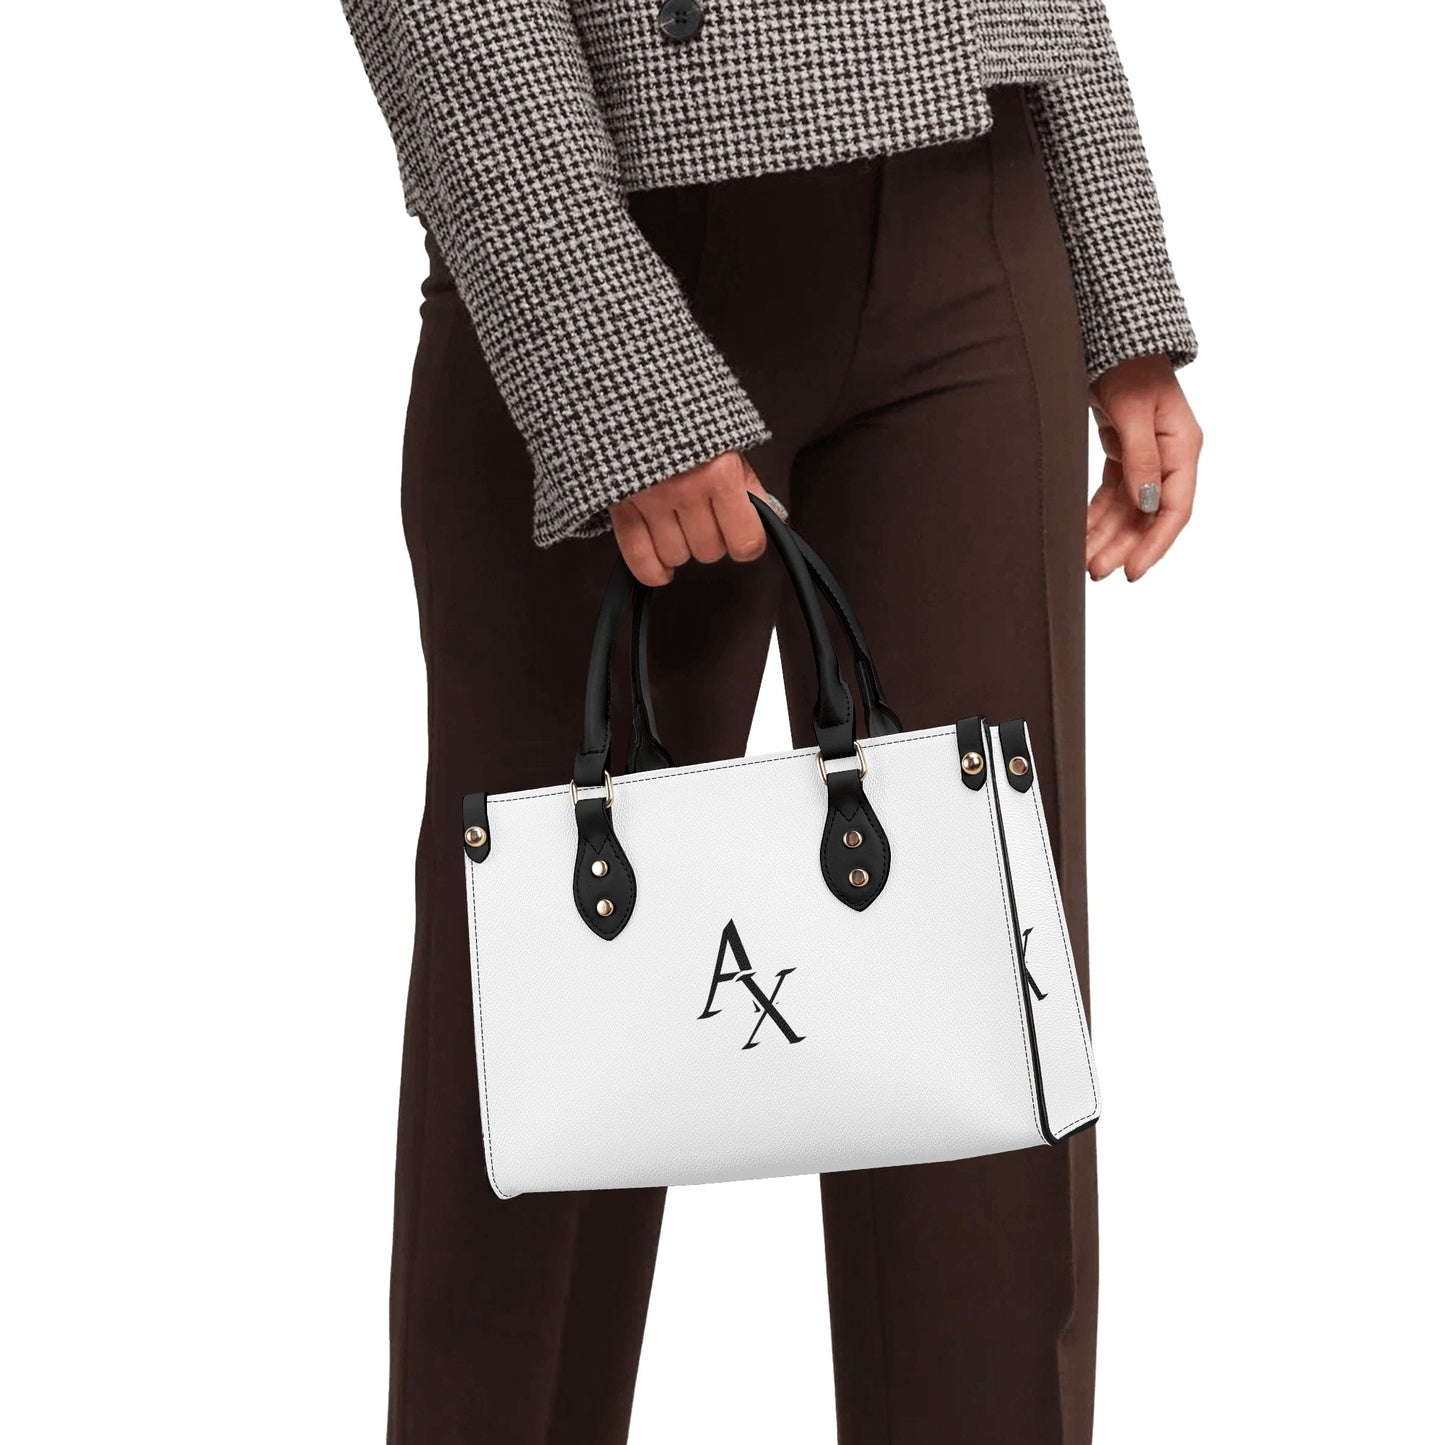 Avenue X Luxury Women PU Handbag